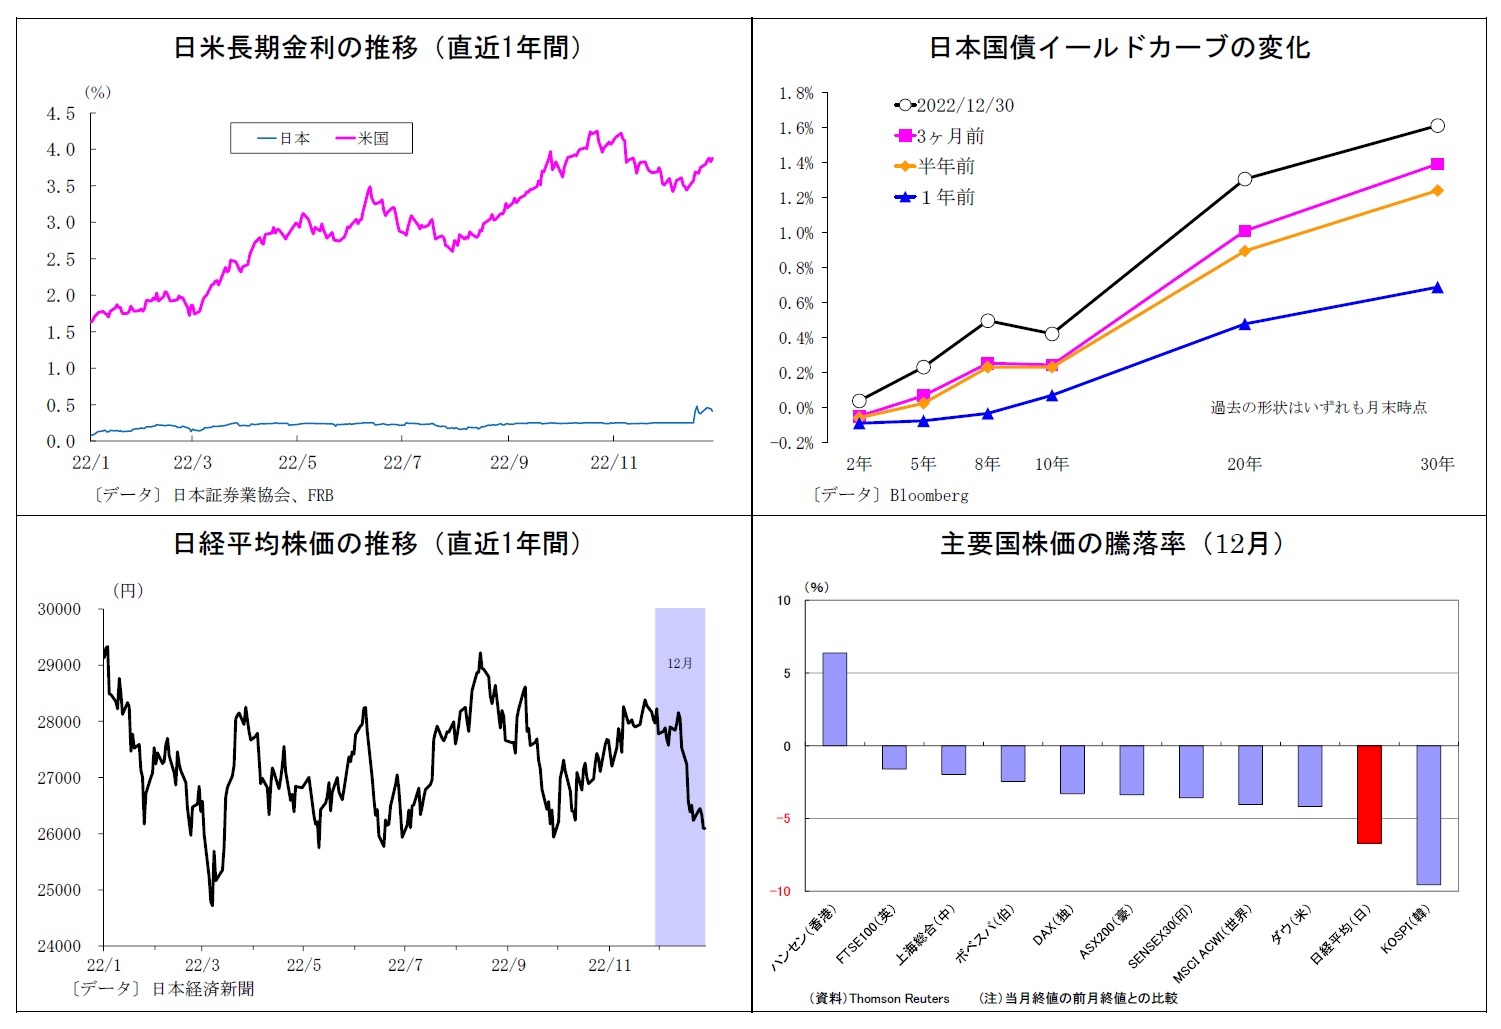 日米長期金利の推移（直近1年間）/日本国債イールドカーブの変化/日経平均株価の推移（直近1年間）/主要国株価の騰落率（12月）